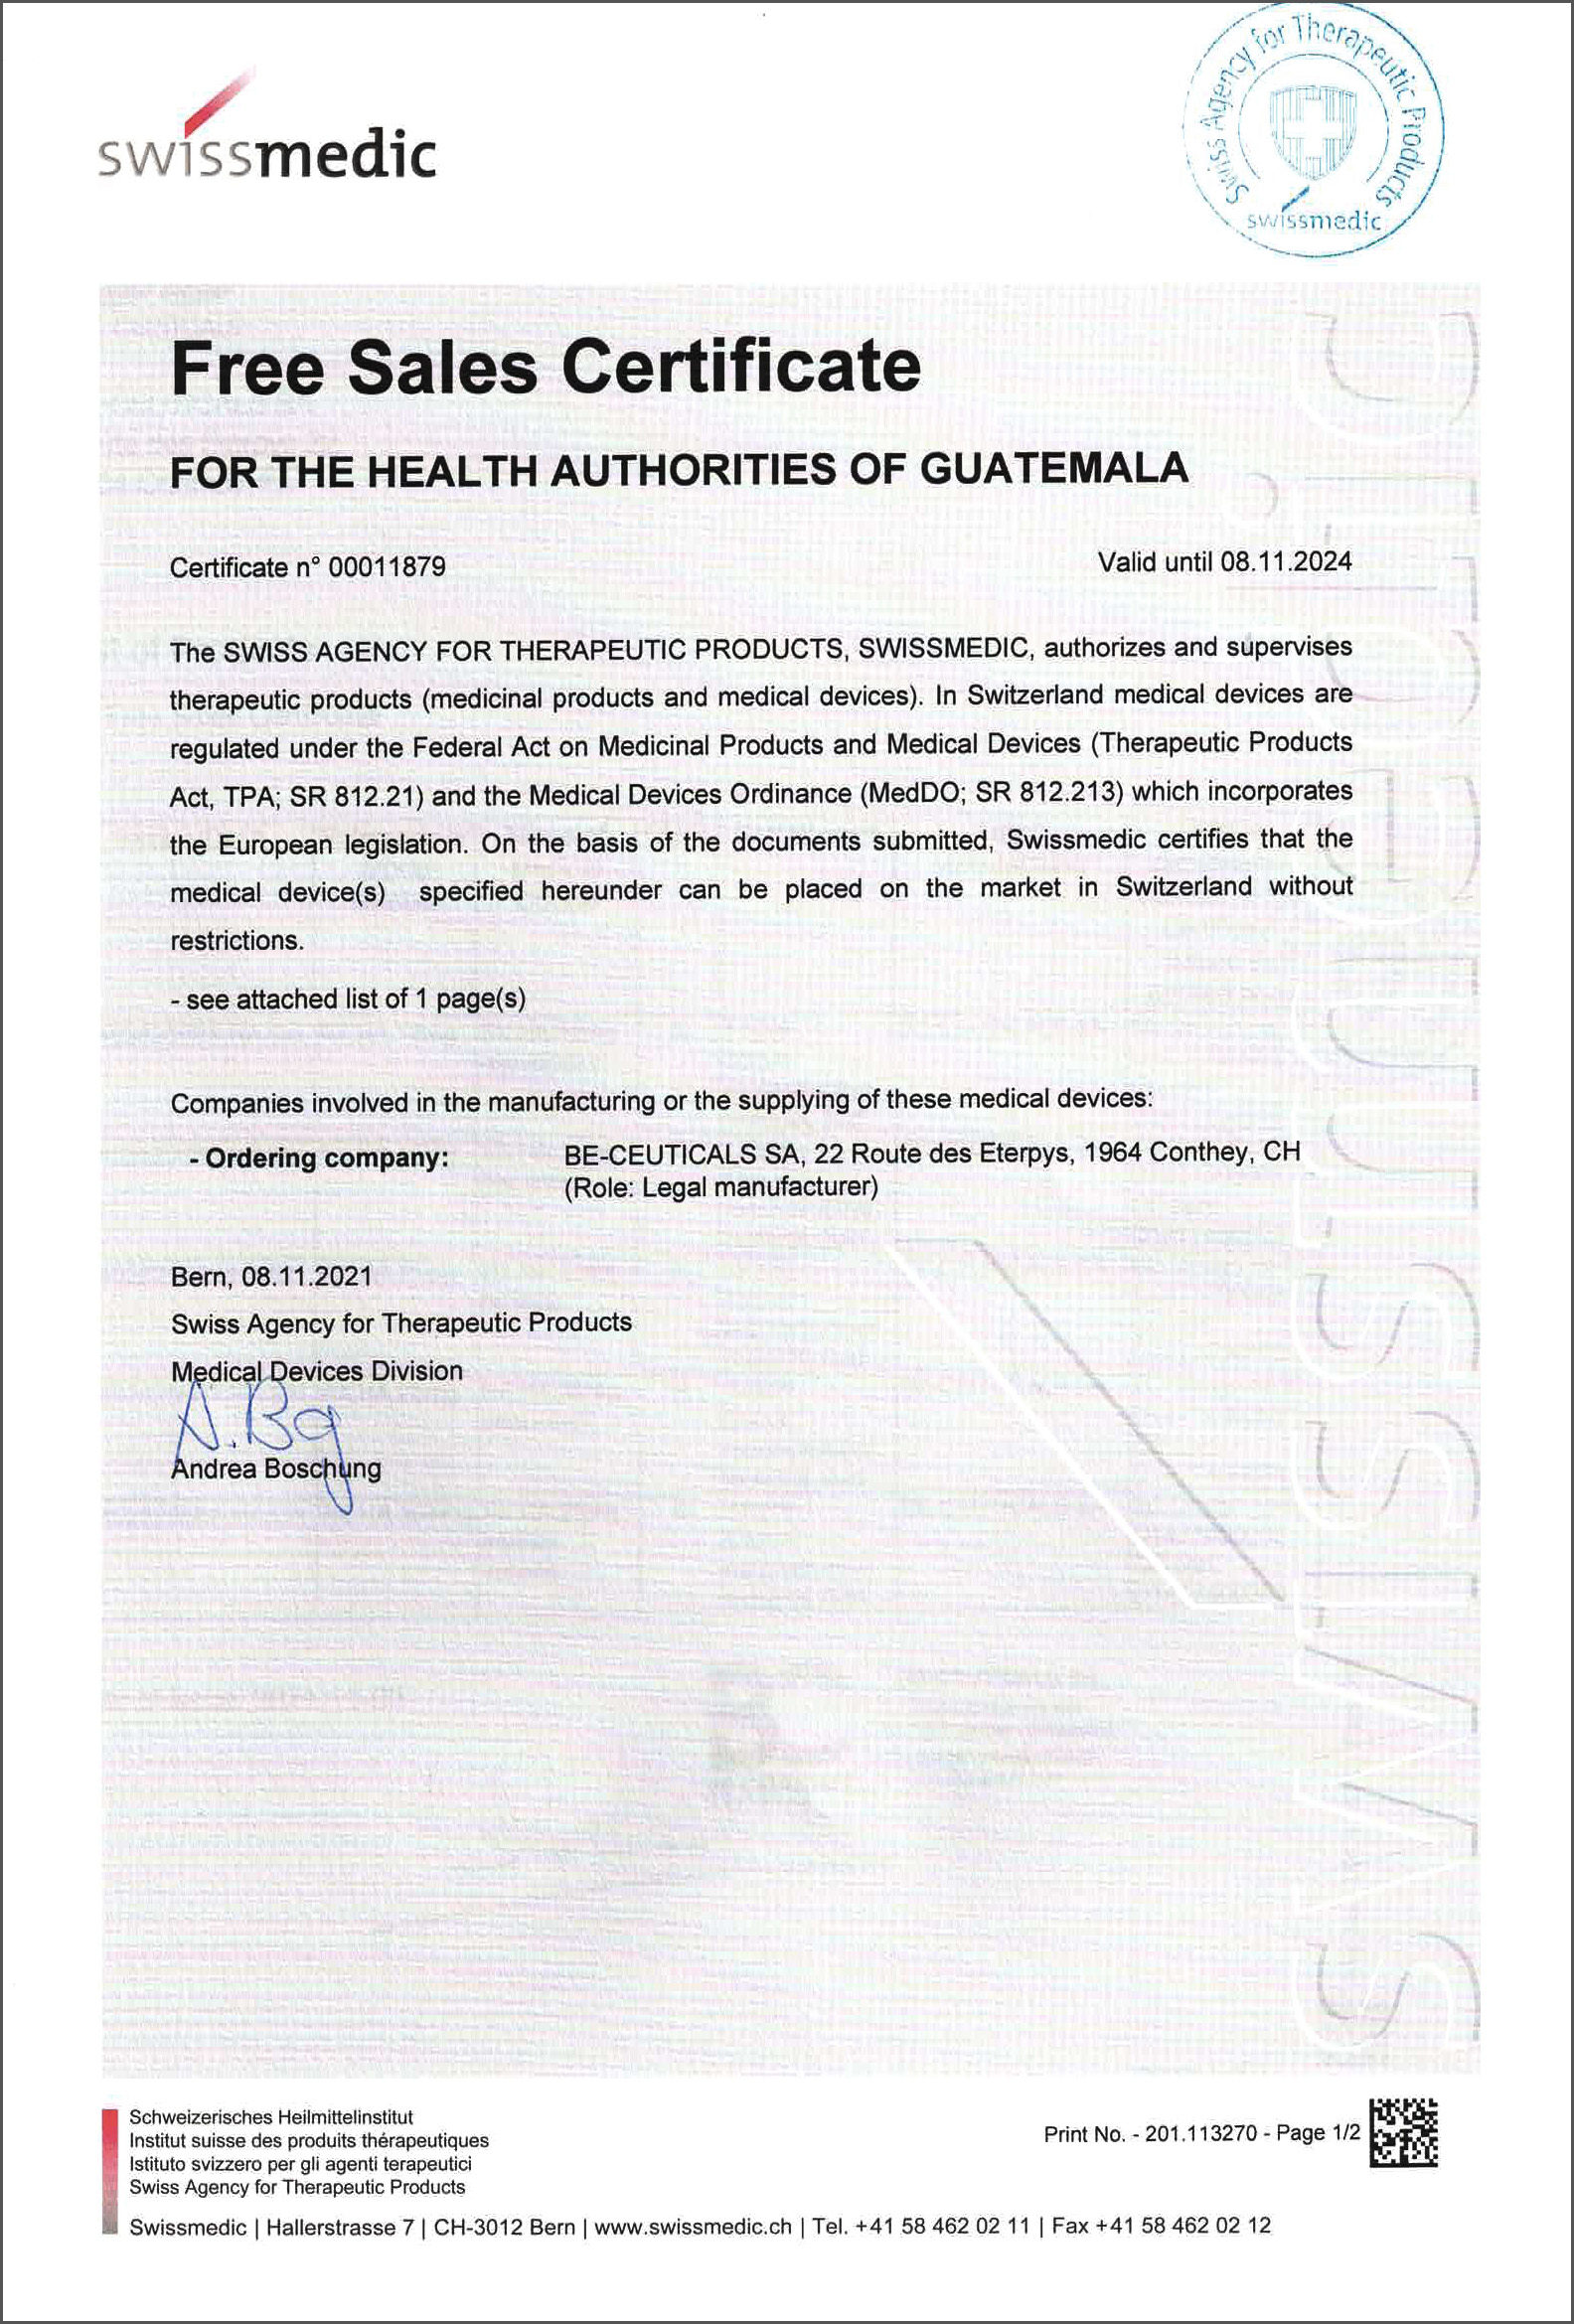 Swissmedic - Free Sales Certificate - Guatemala